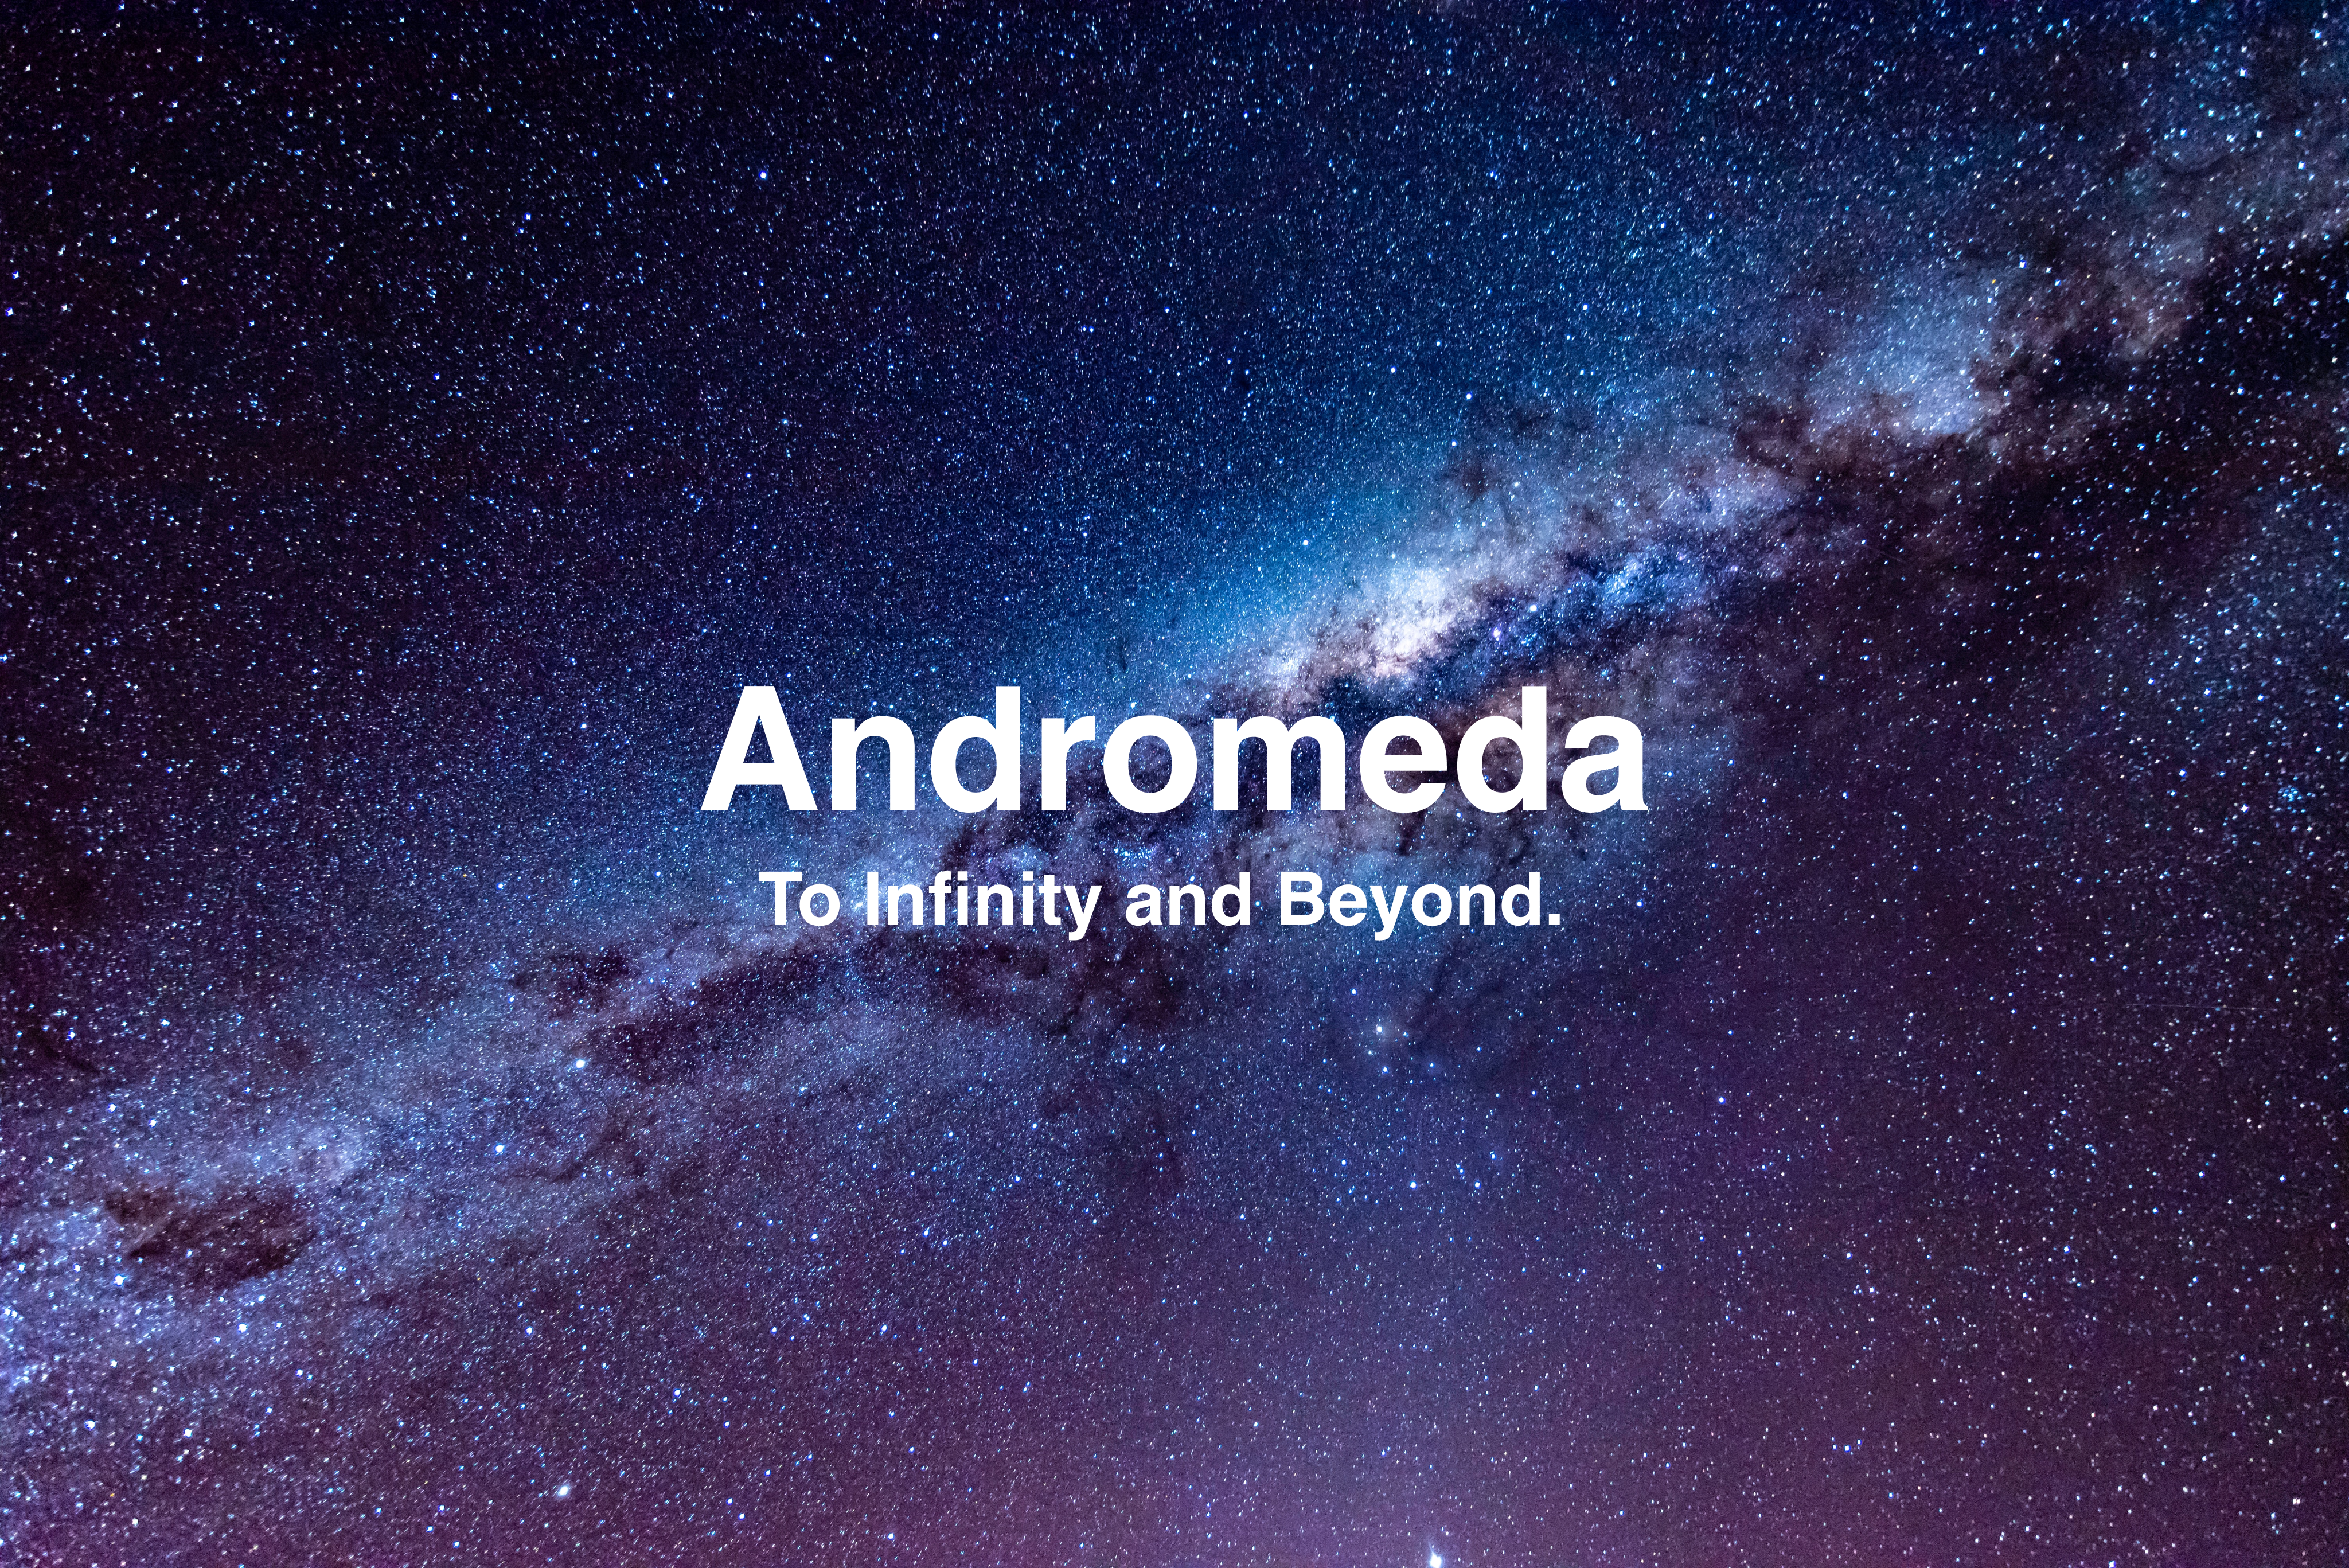 Andromeda Next Generation Open Source Language Model